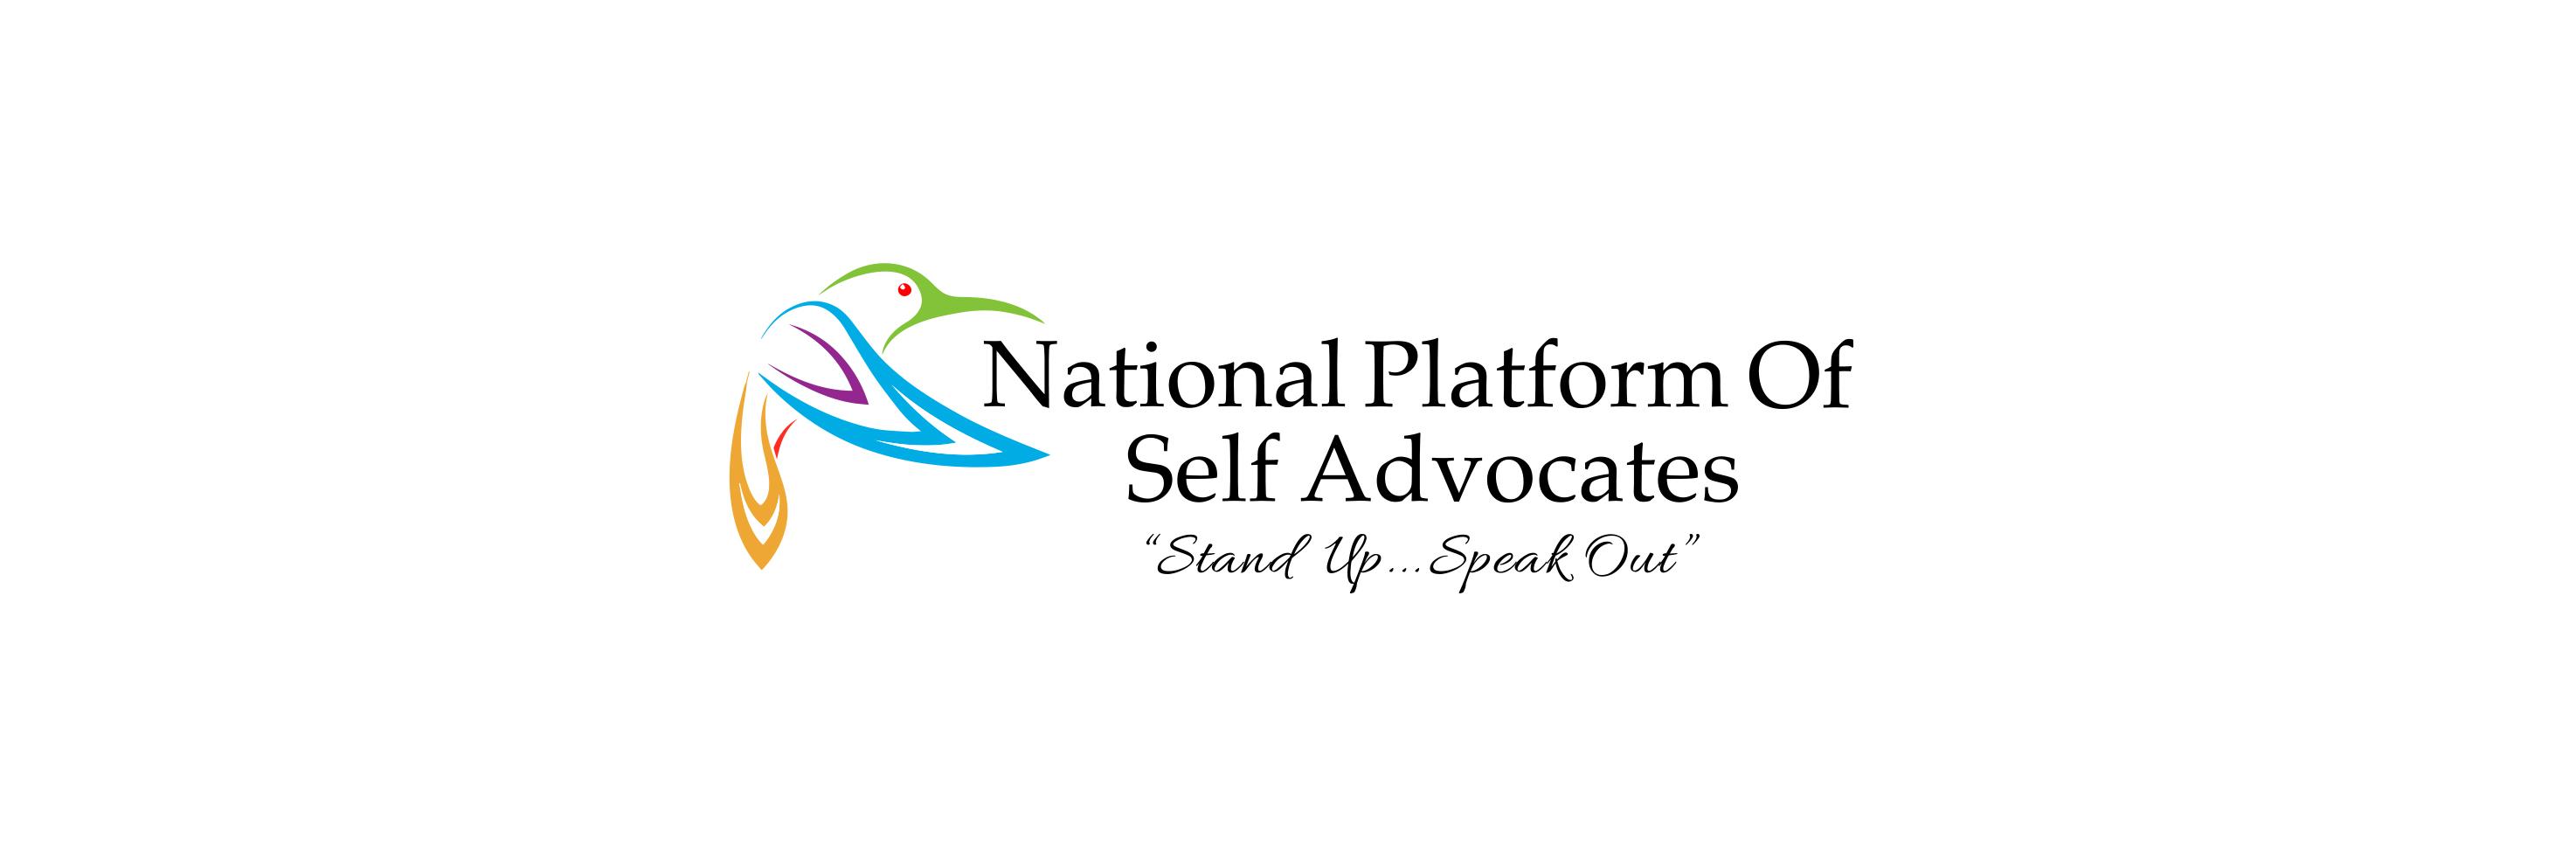 National Platform of Self Advocates Limerick meeting